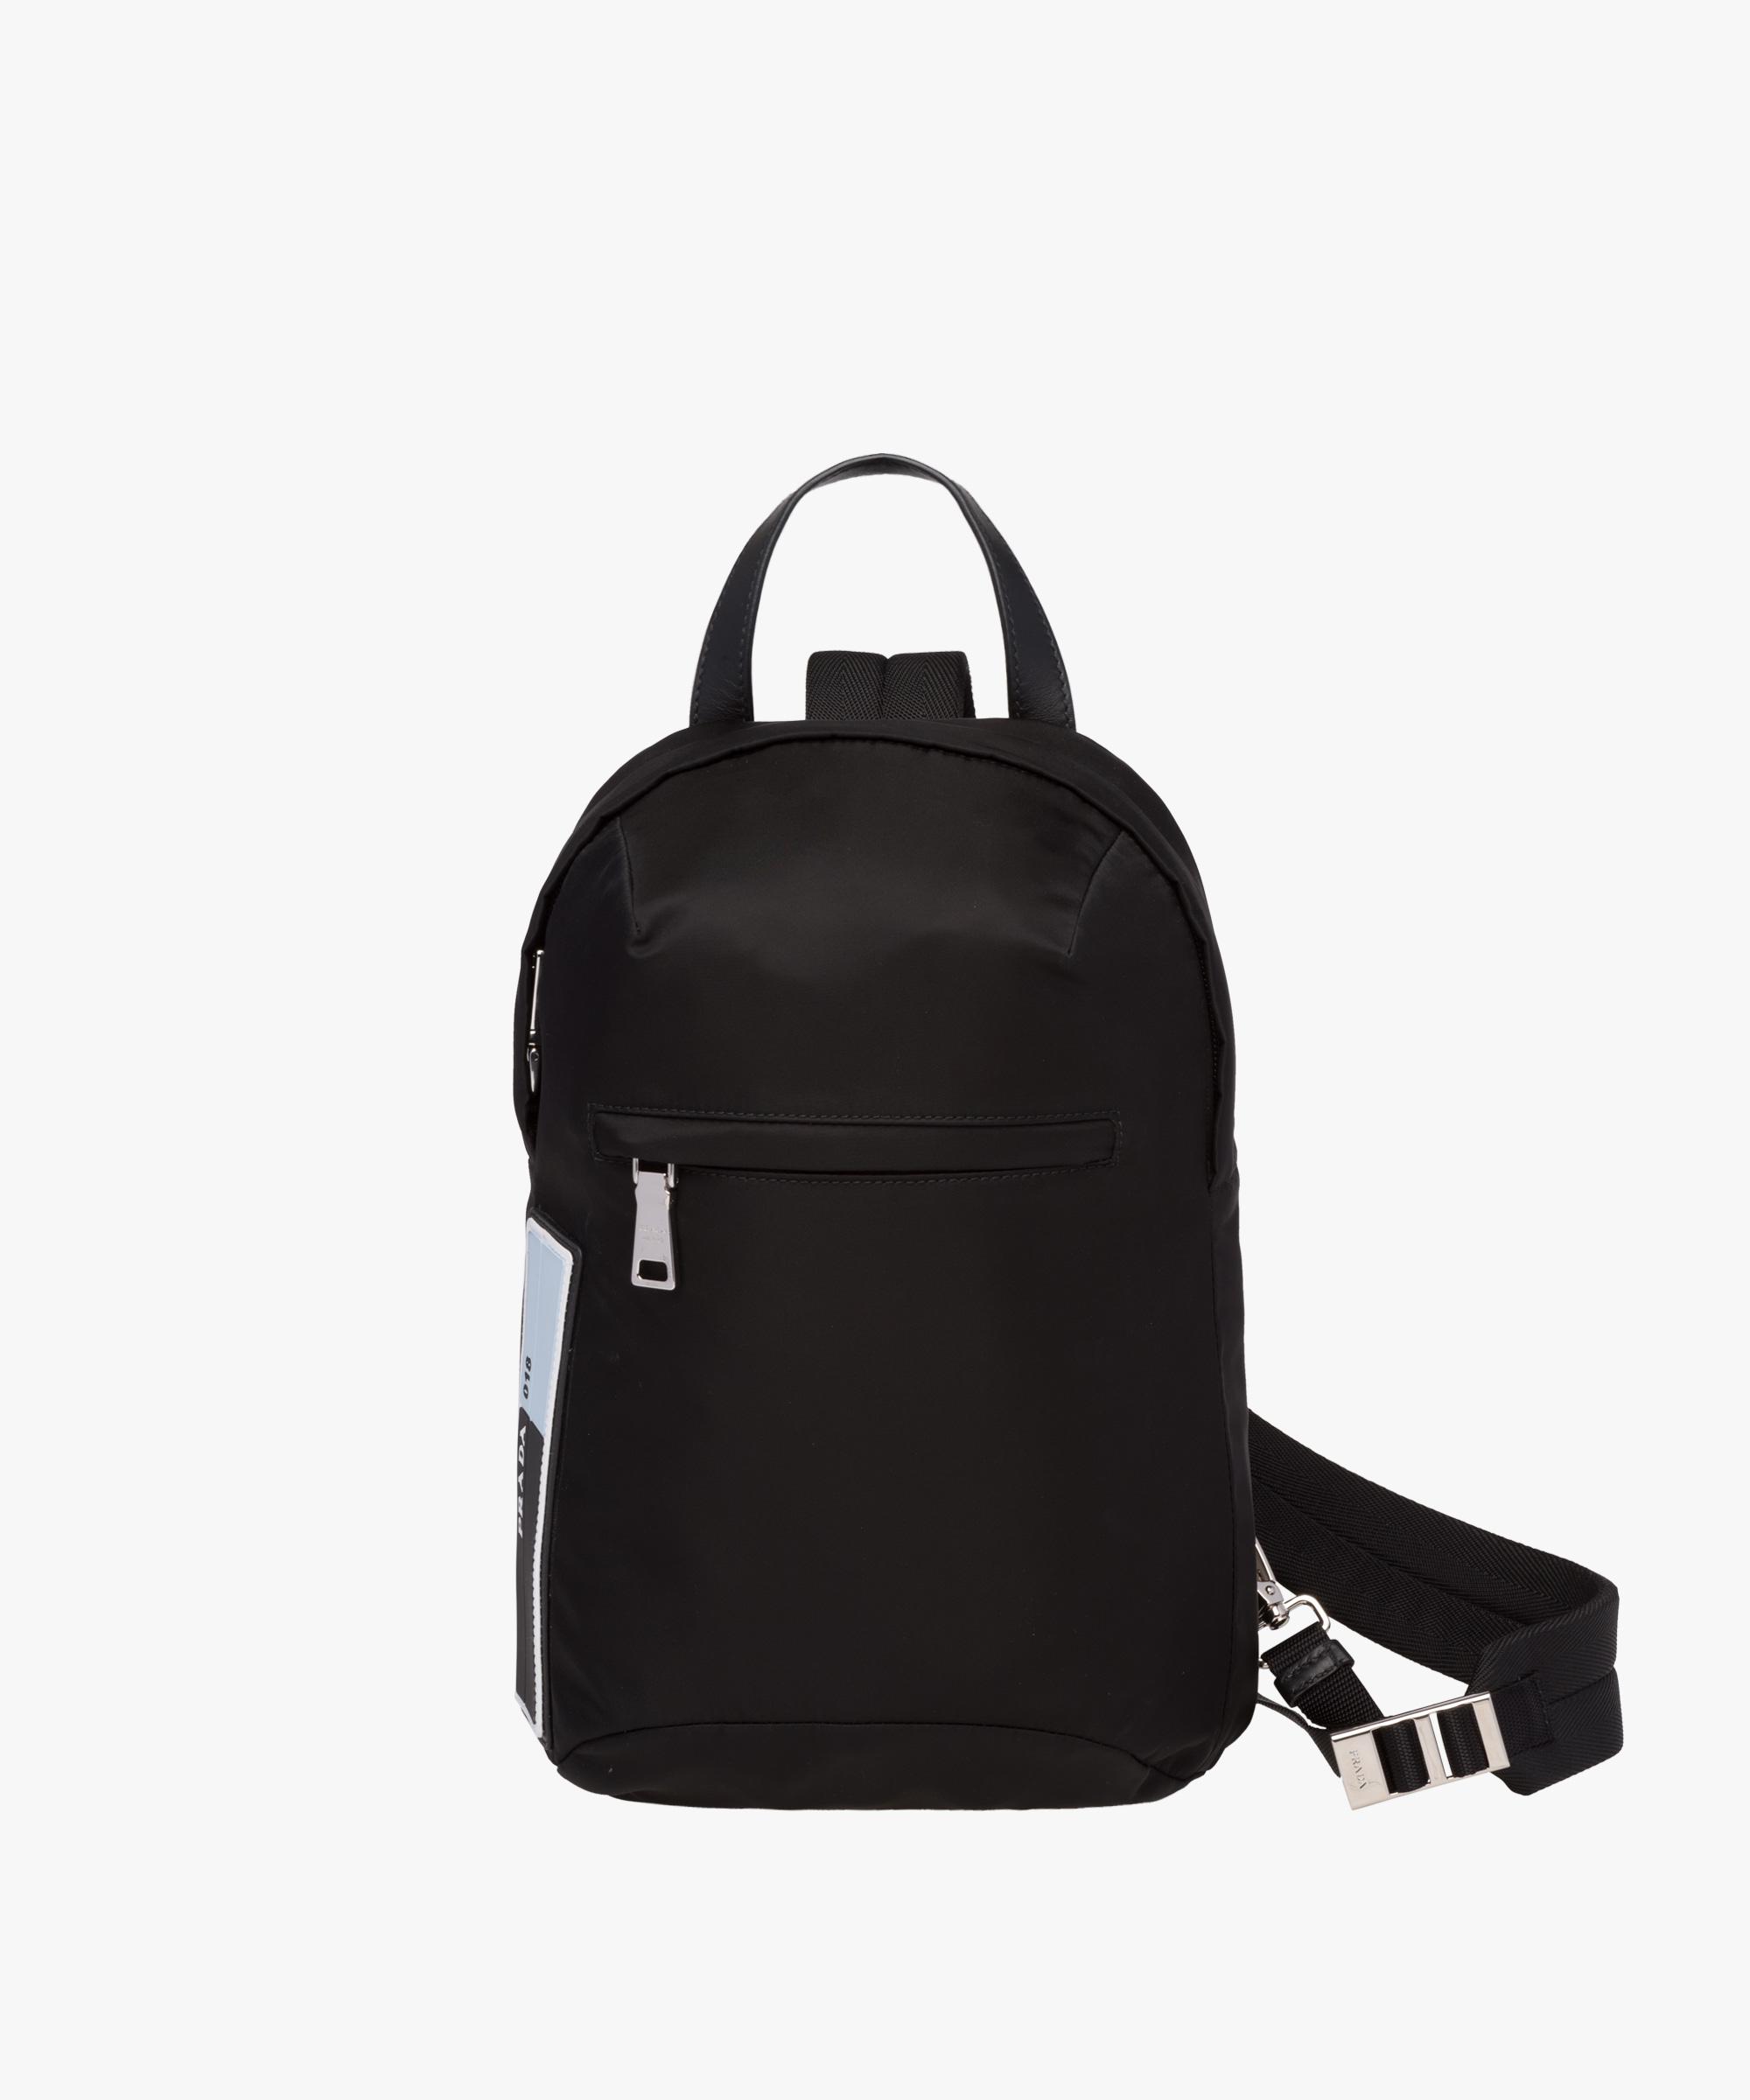 prada one shoulder nylon backpack